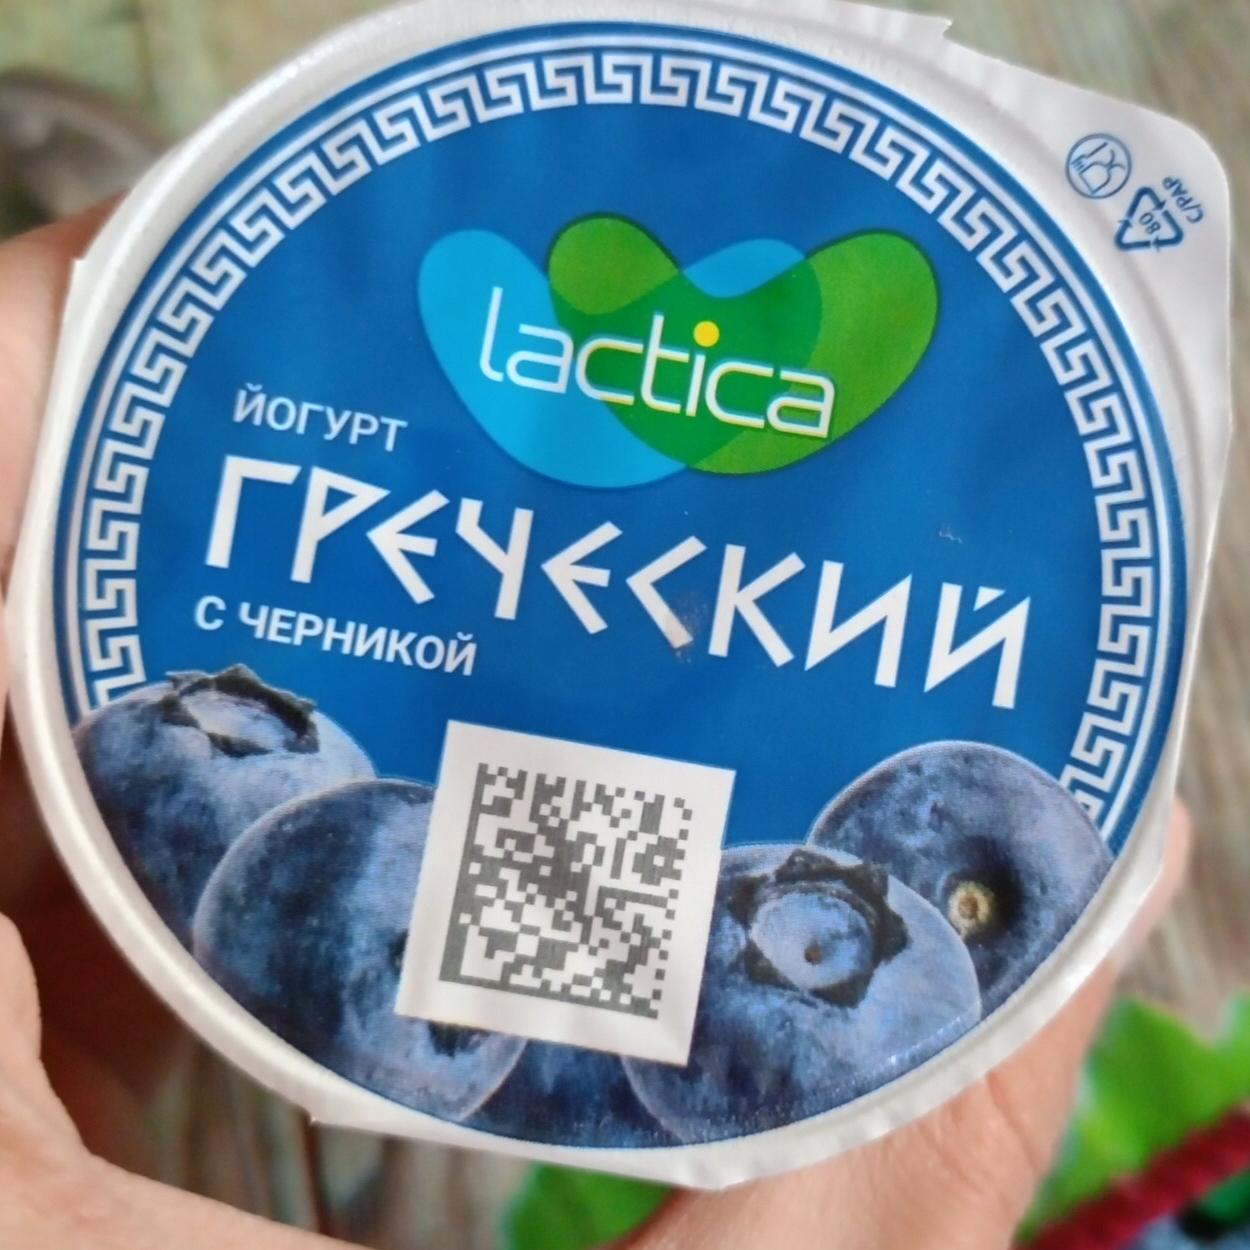 Фото - Йогурт греческий с черникой 3.4% lactica